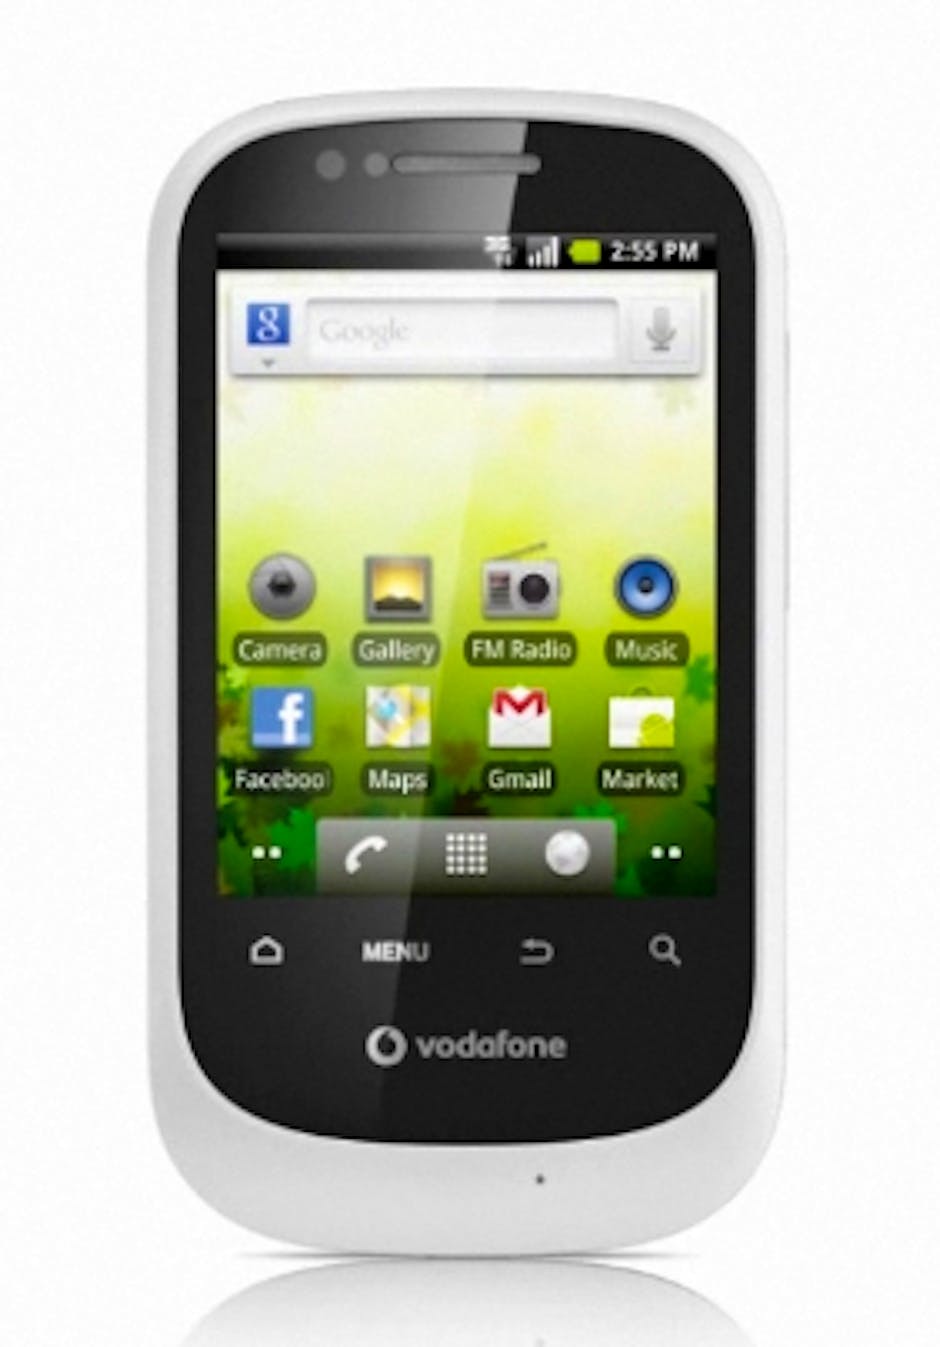 vodafone mobile broadband android